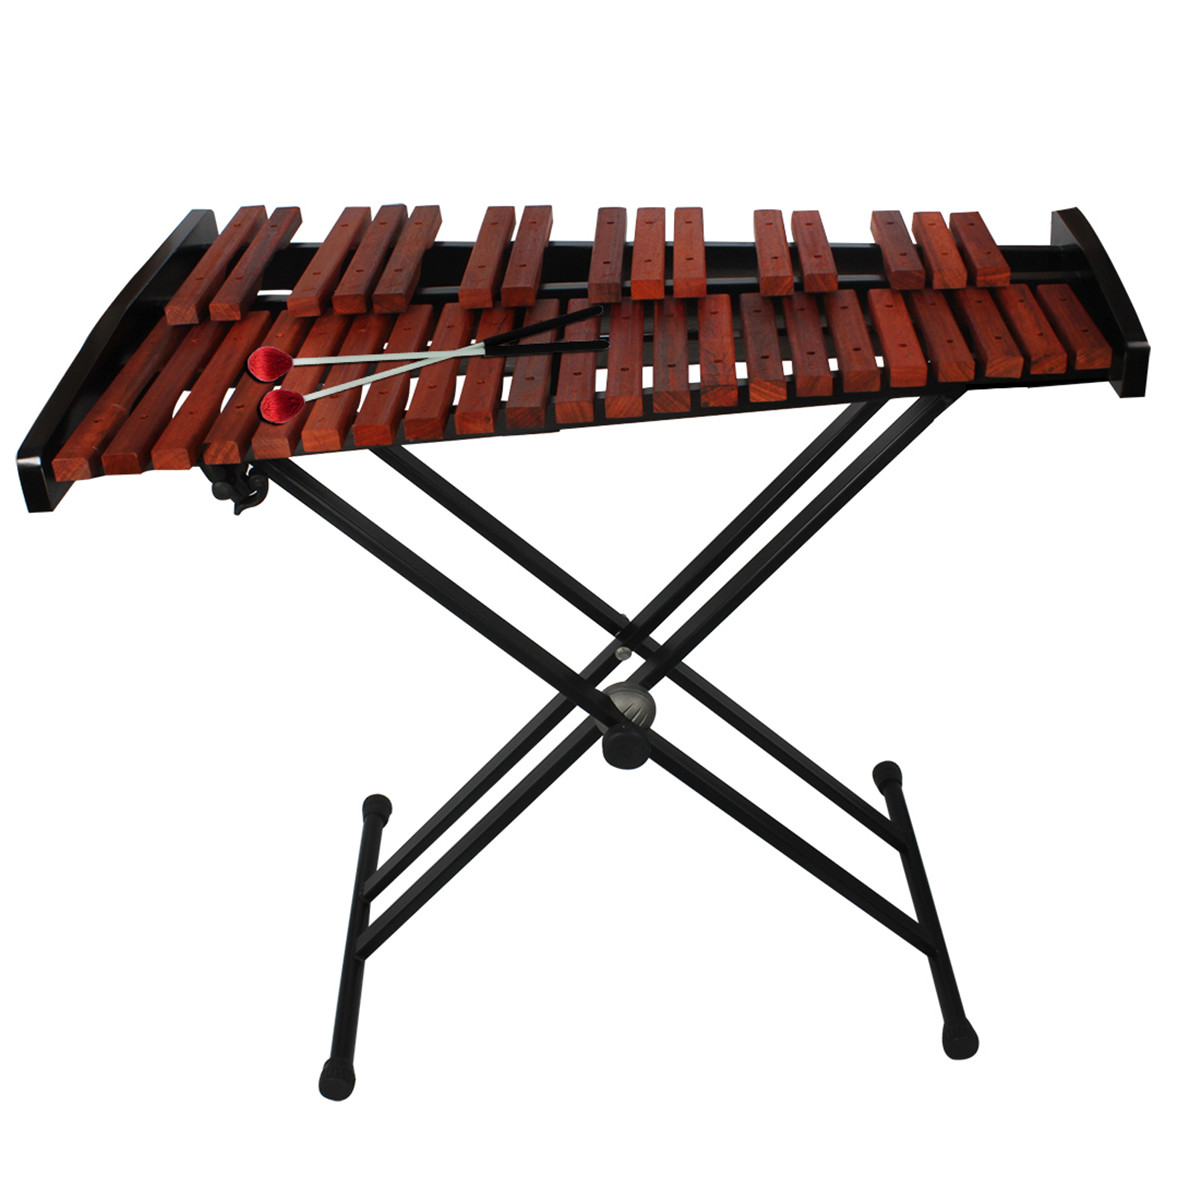 1 Pair Marimba Hammer Percussion Mallet Sticks Musical Instrument Parts Beginner